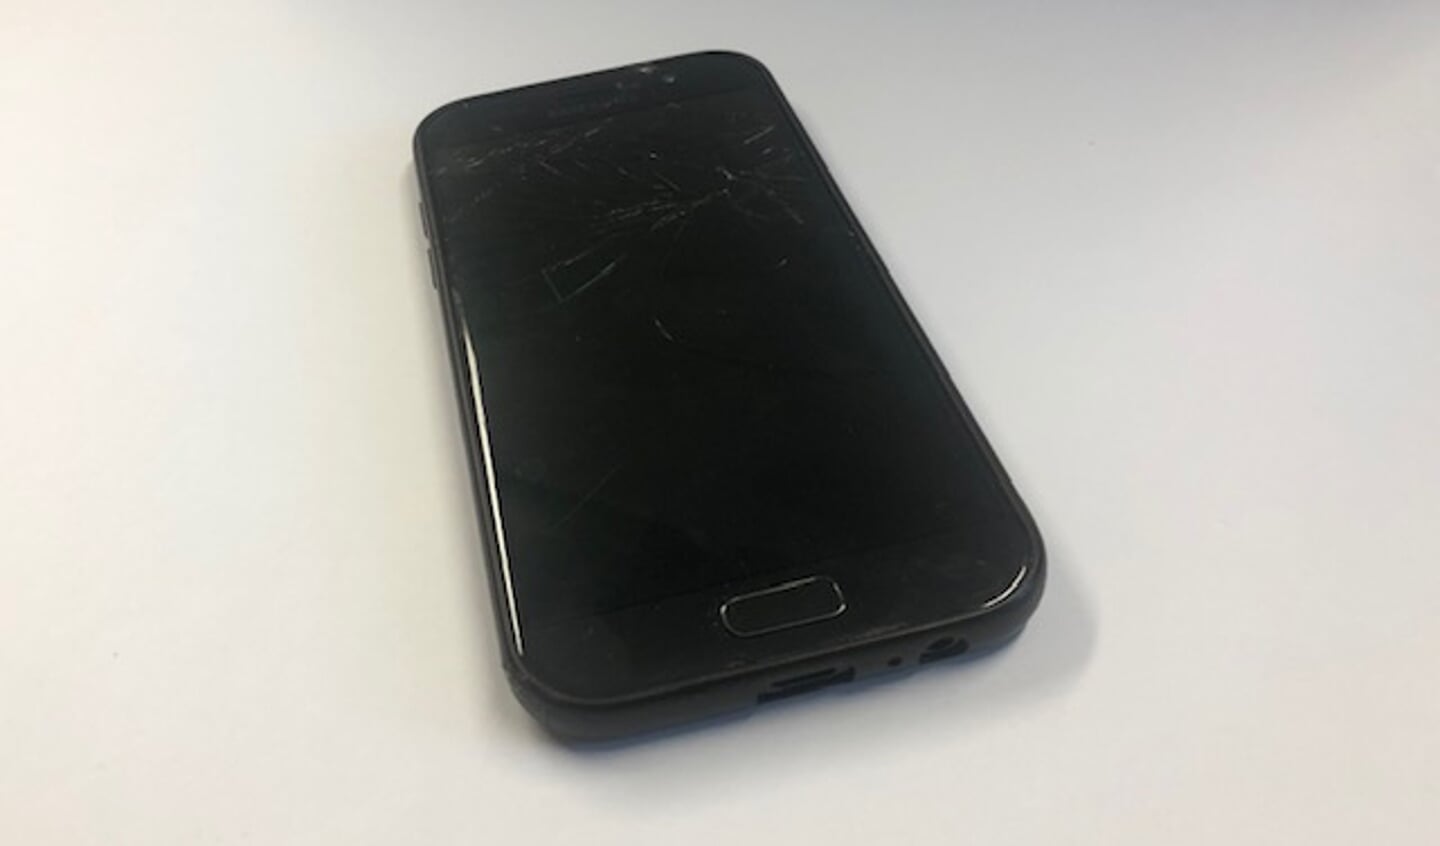 Samsung telefoon met kapot scherm